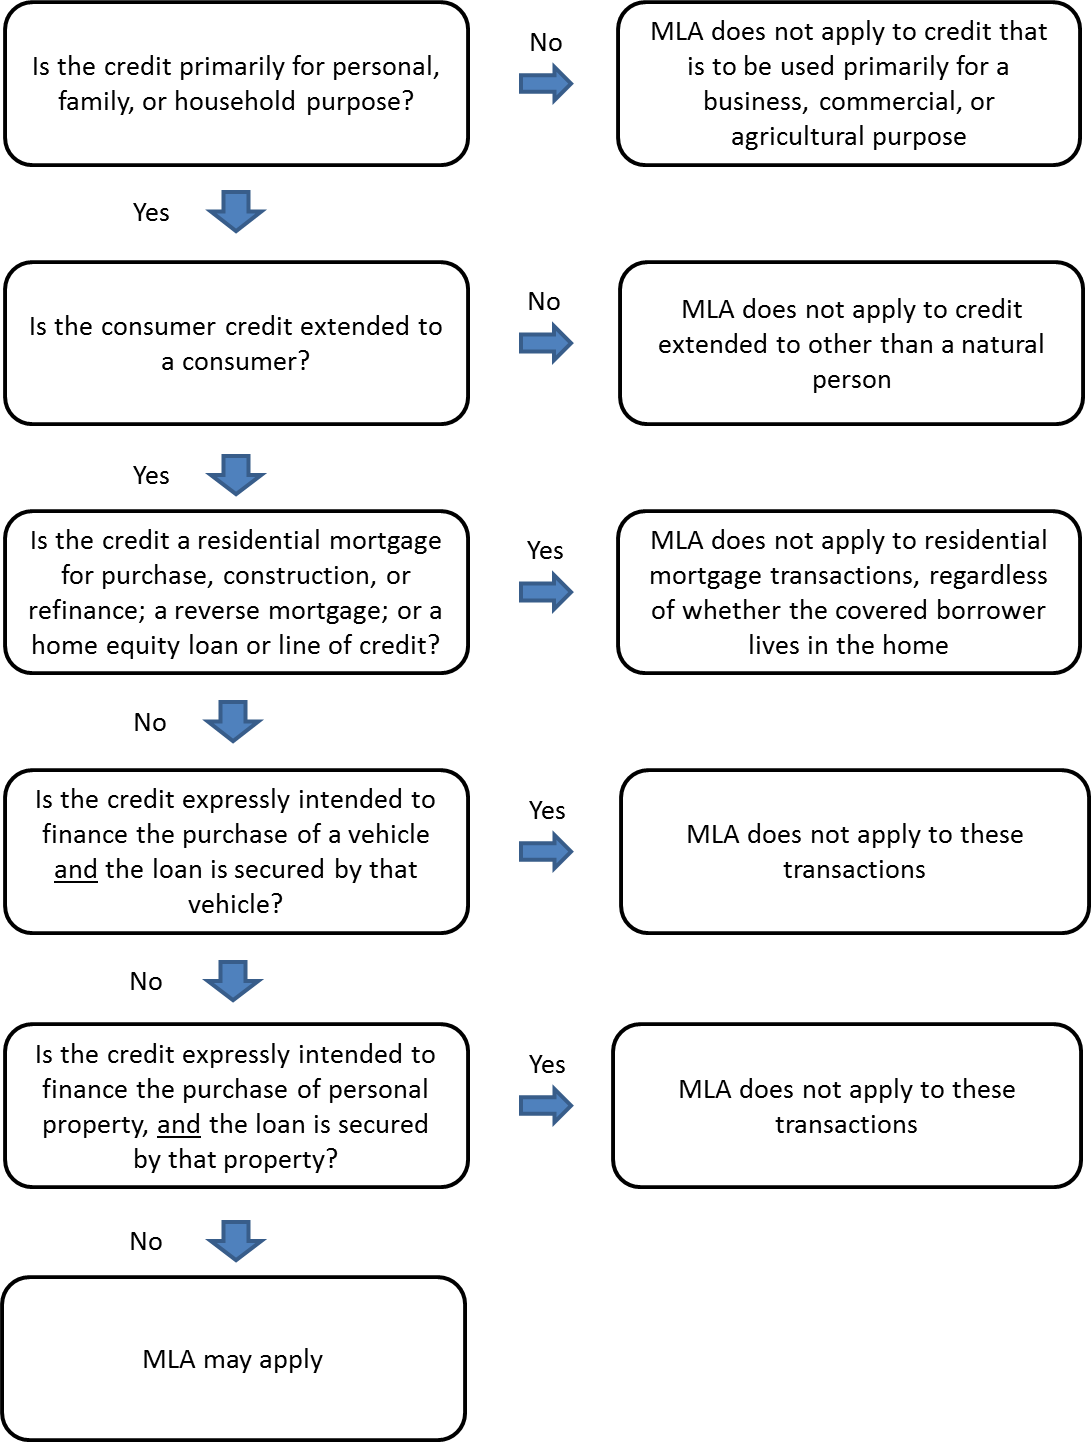 Flowchart for determining MLA applicability